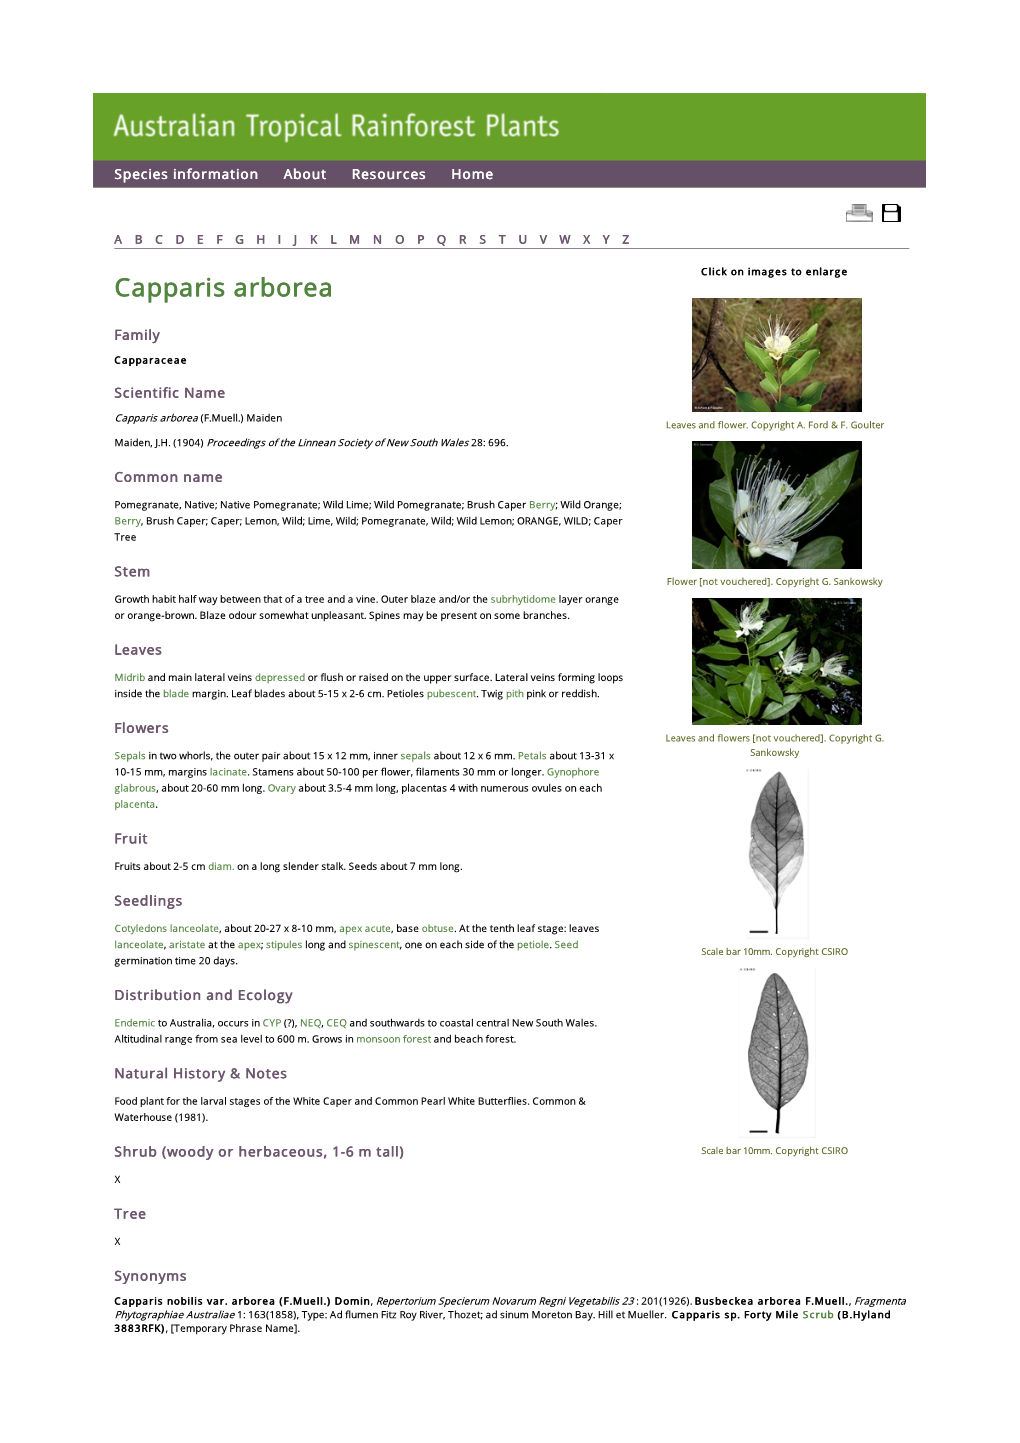 Capparis Arborea Click on Images to Enlarge